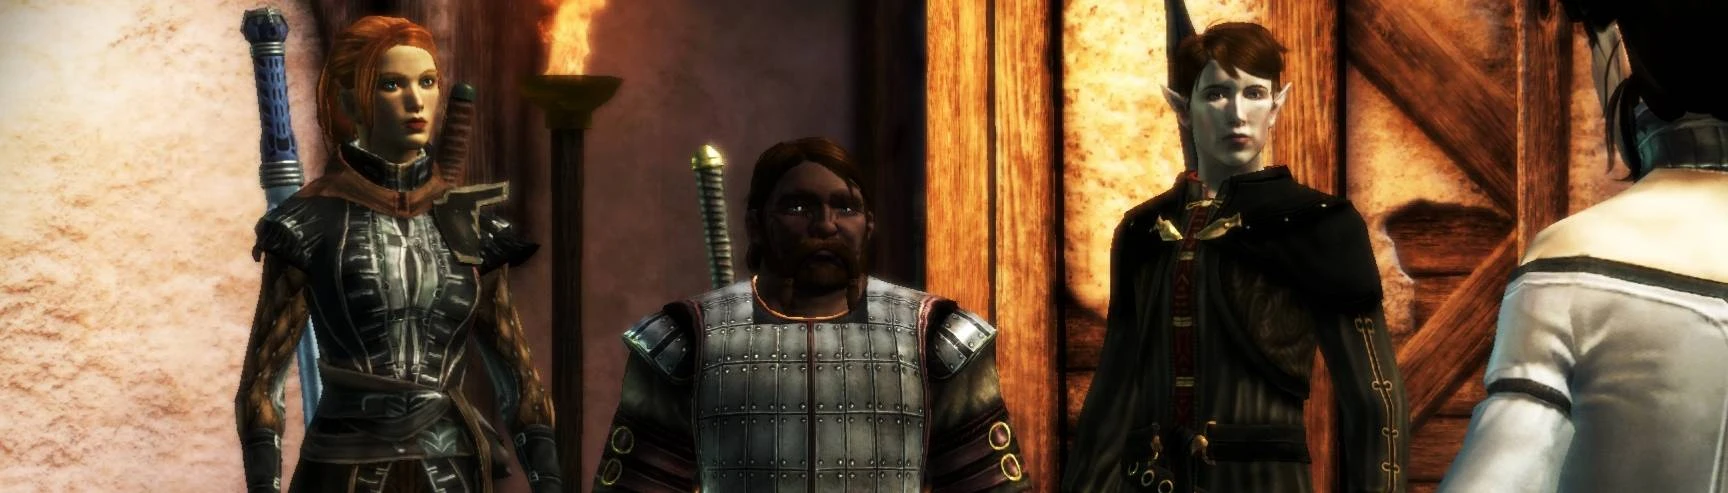 The Golems of Amgarrak is a DLC for Dragon Age: Origins